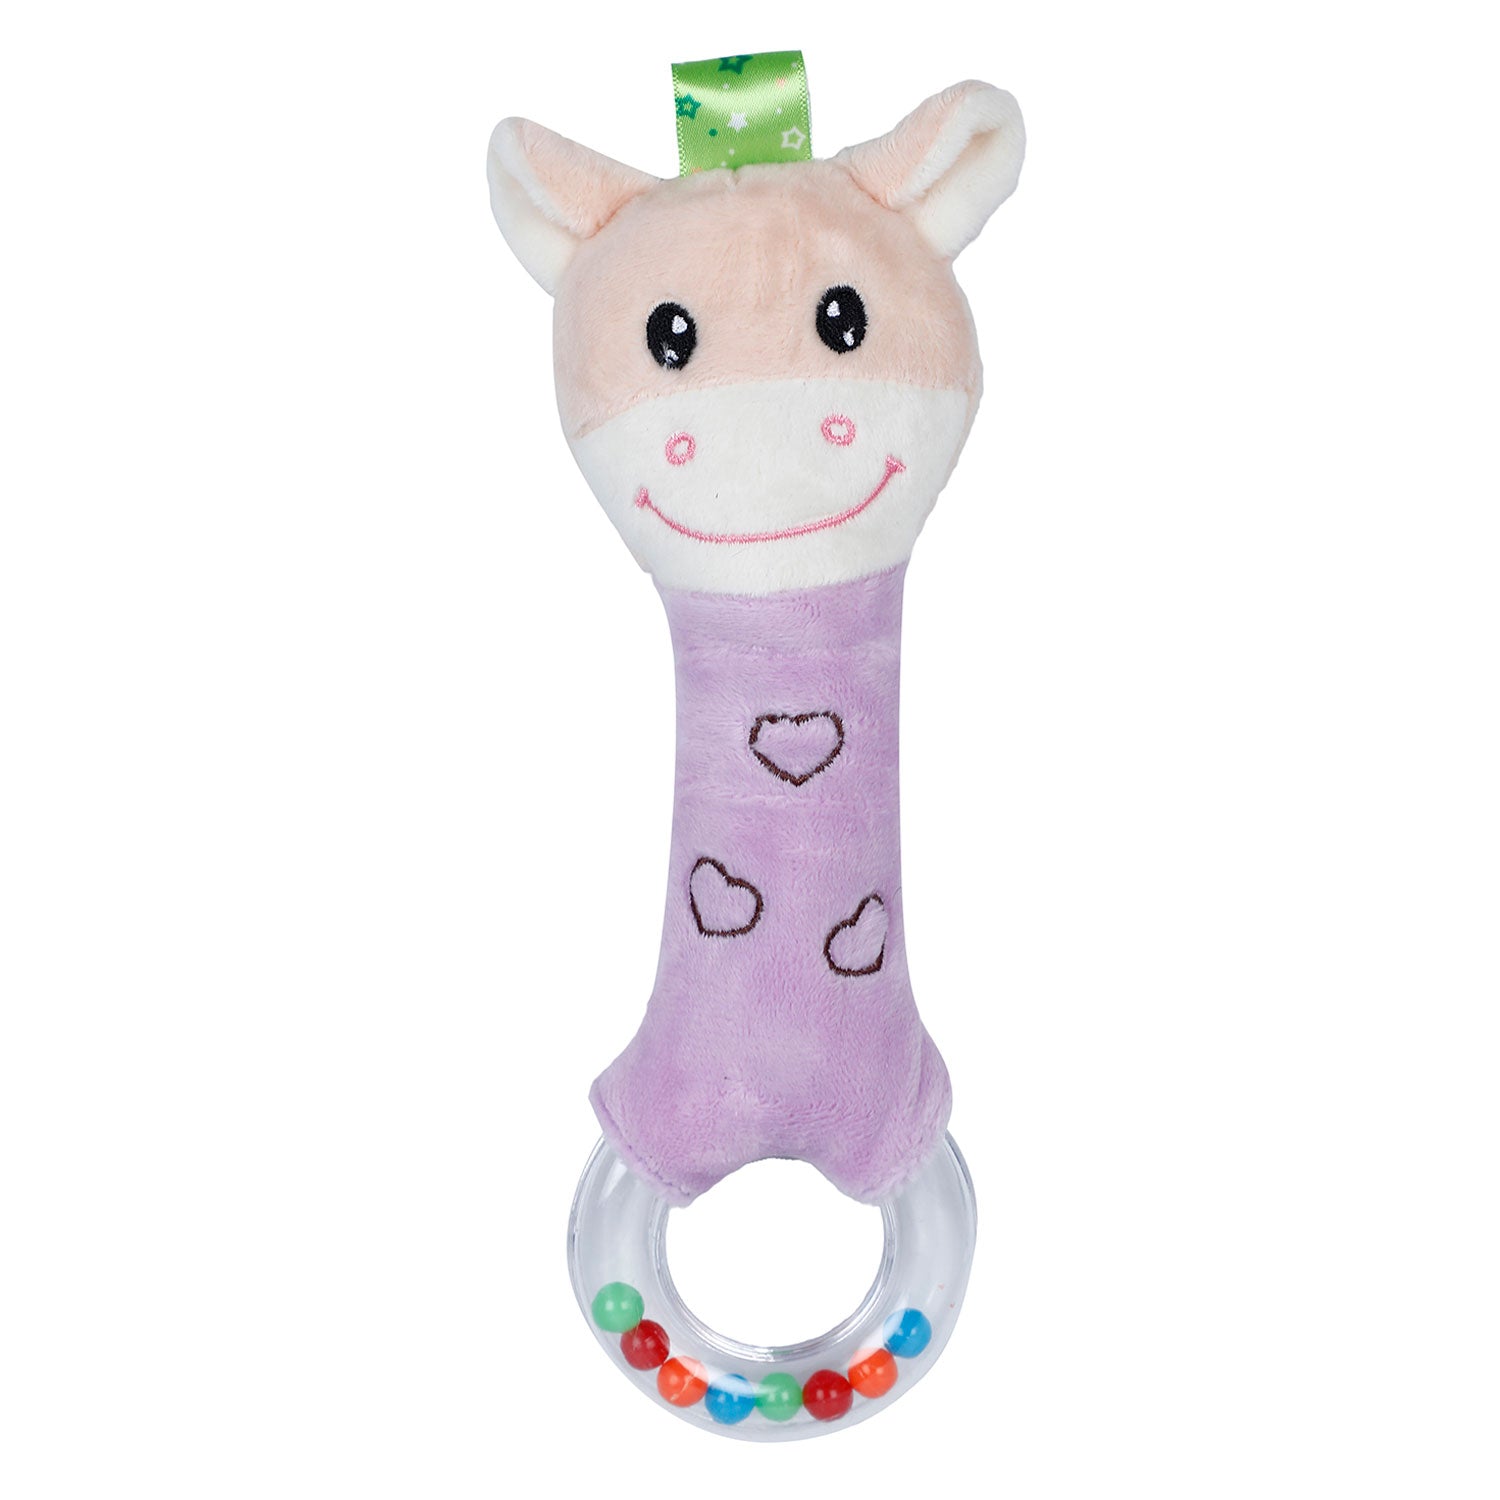 Baby Moo Giraffe Squeaker Sound Handheld Rattle Toy - Purple